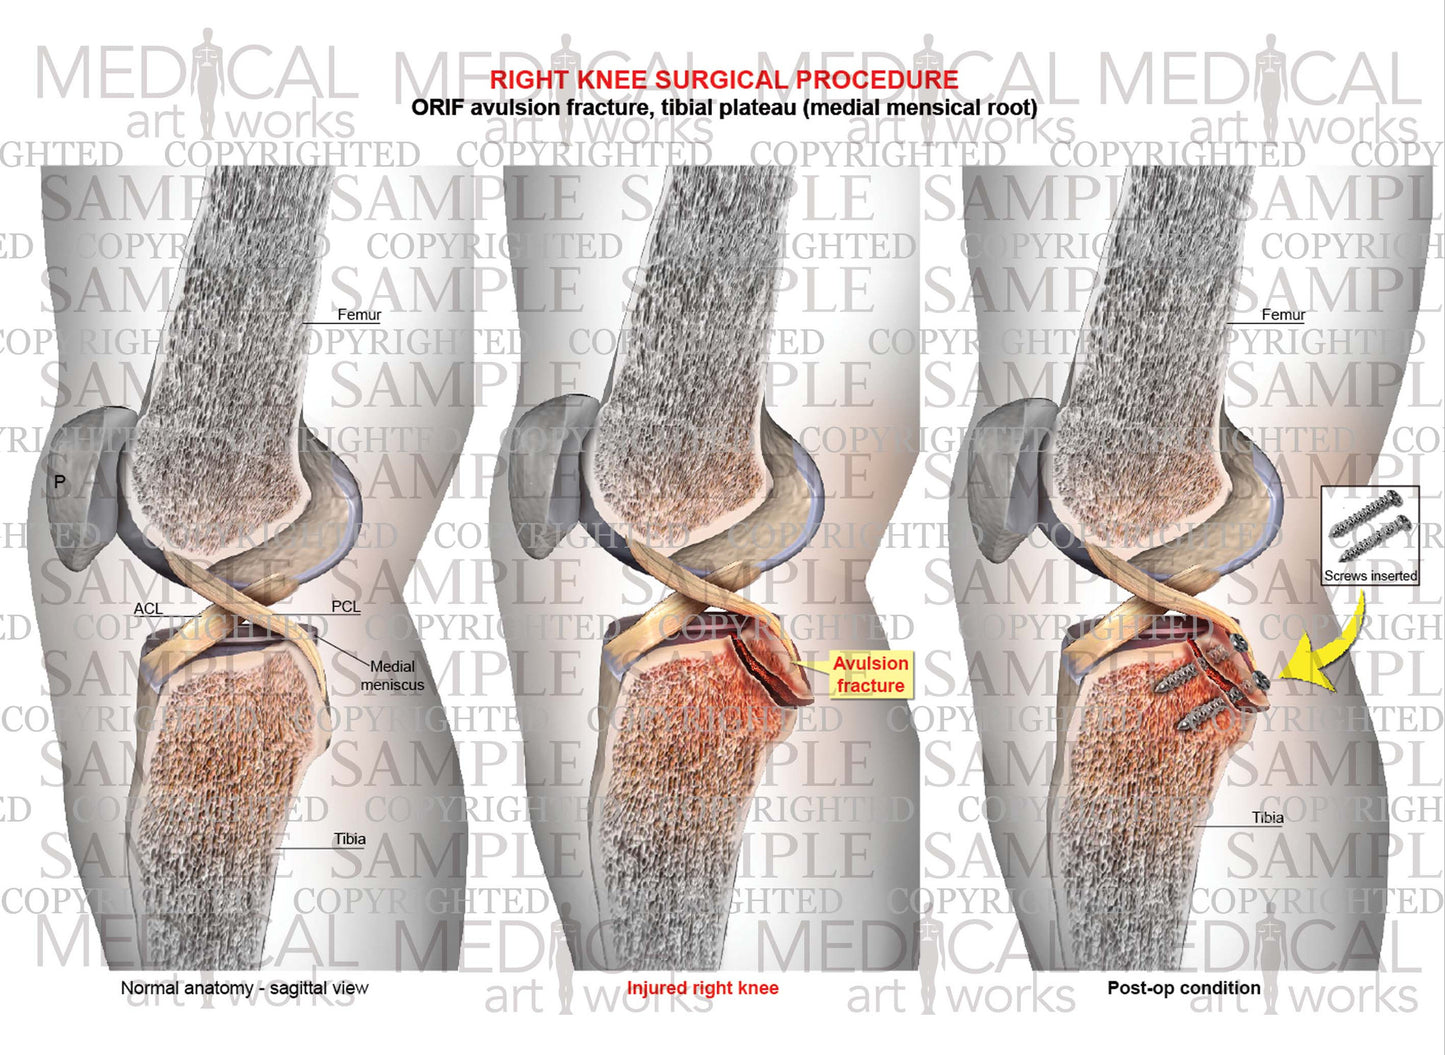 Right Knee Arthroscopy - ORIF avulsion fracture